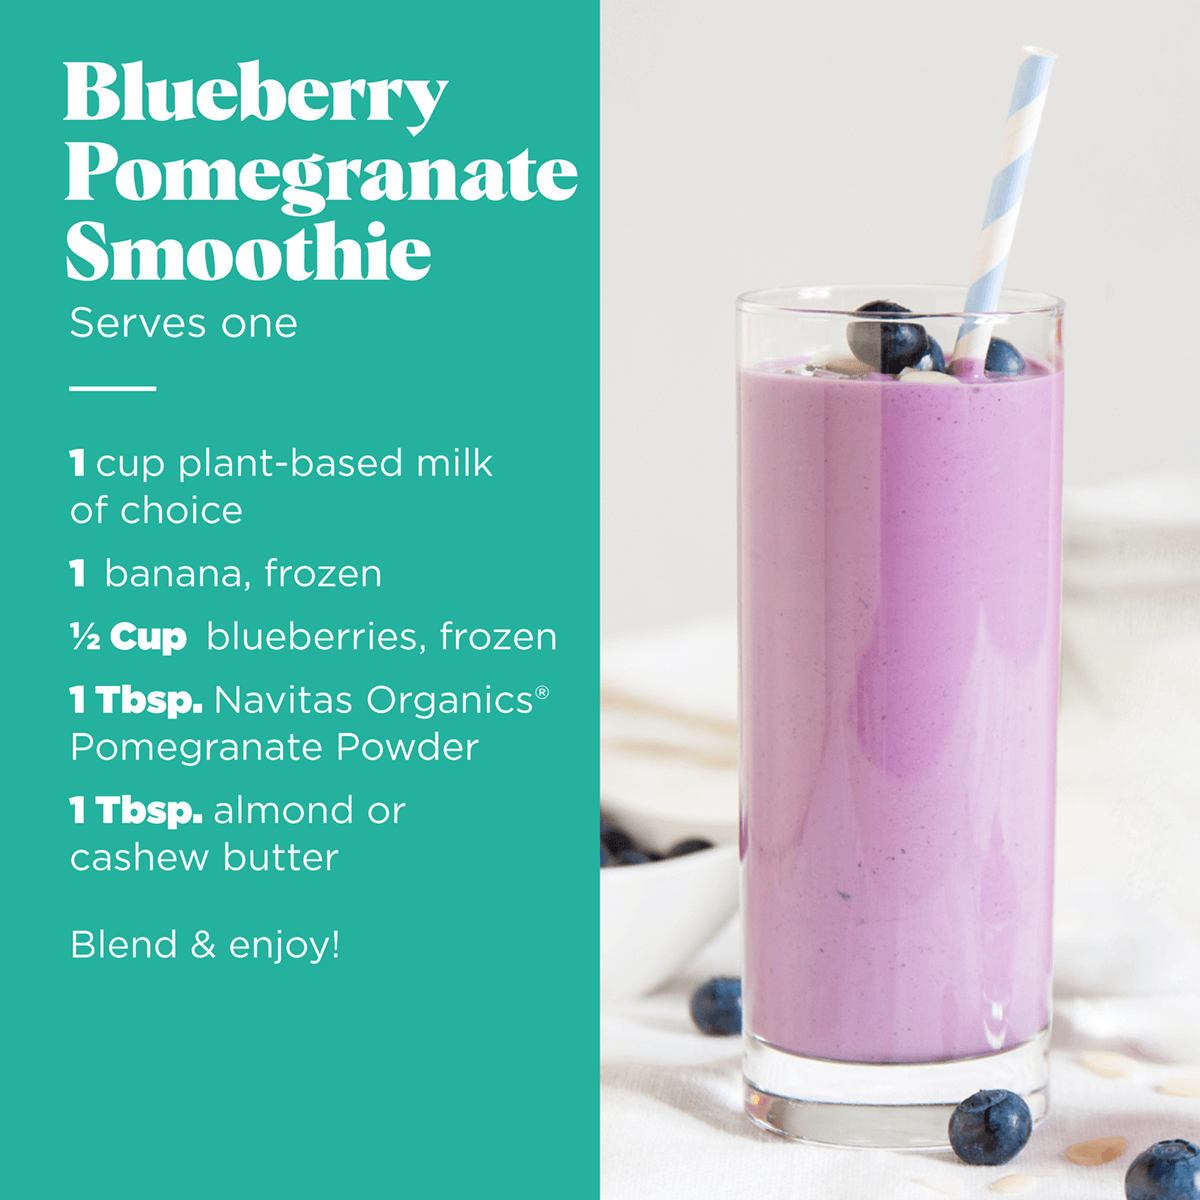 Blueberry Pomegranate Smoothie Recipe.